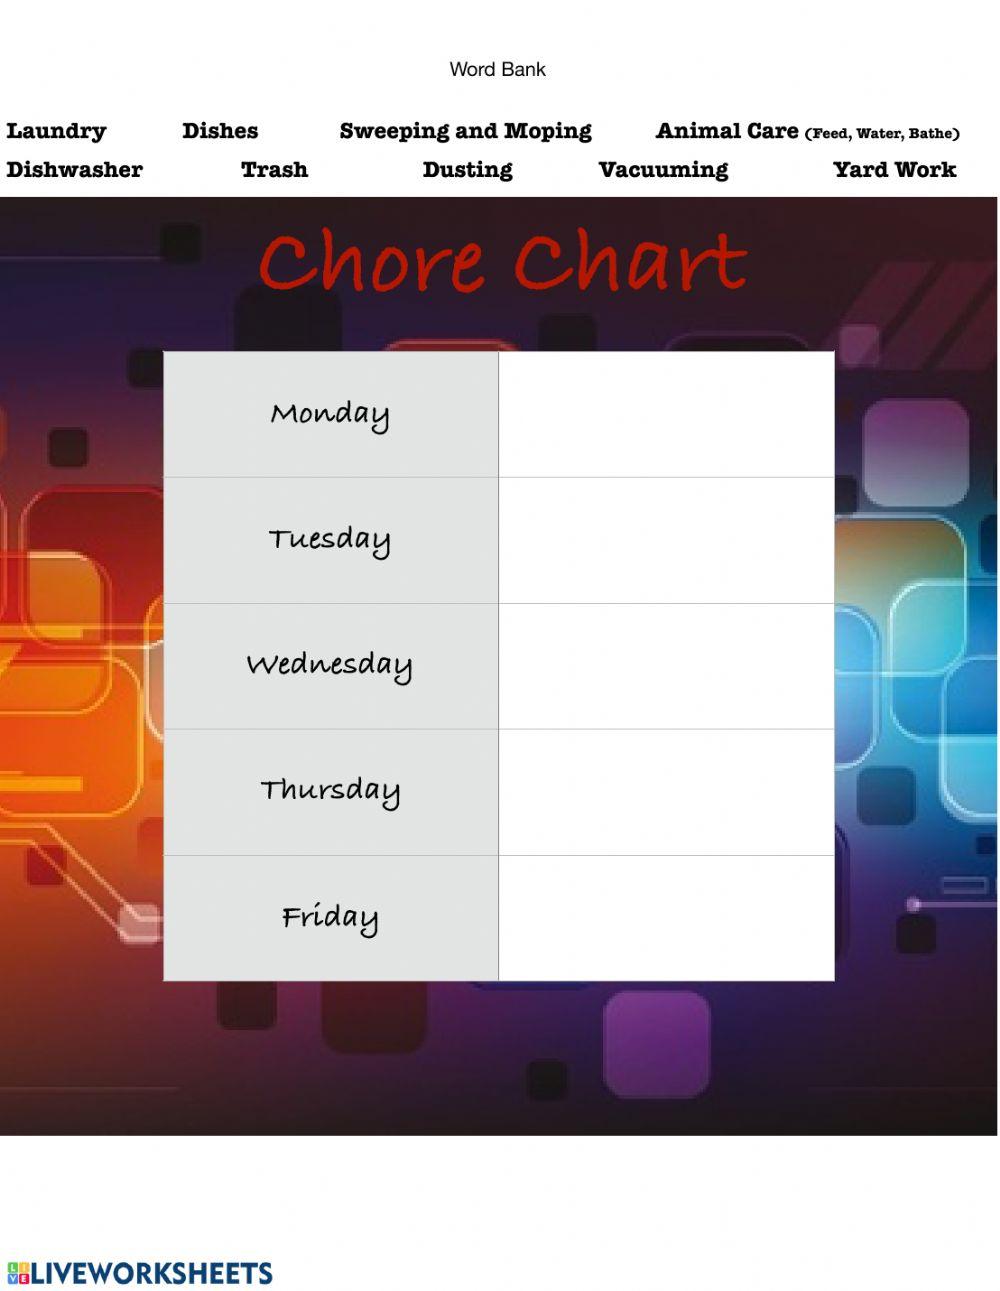 Chore Chart Official